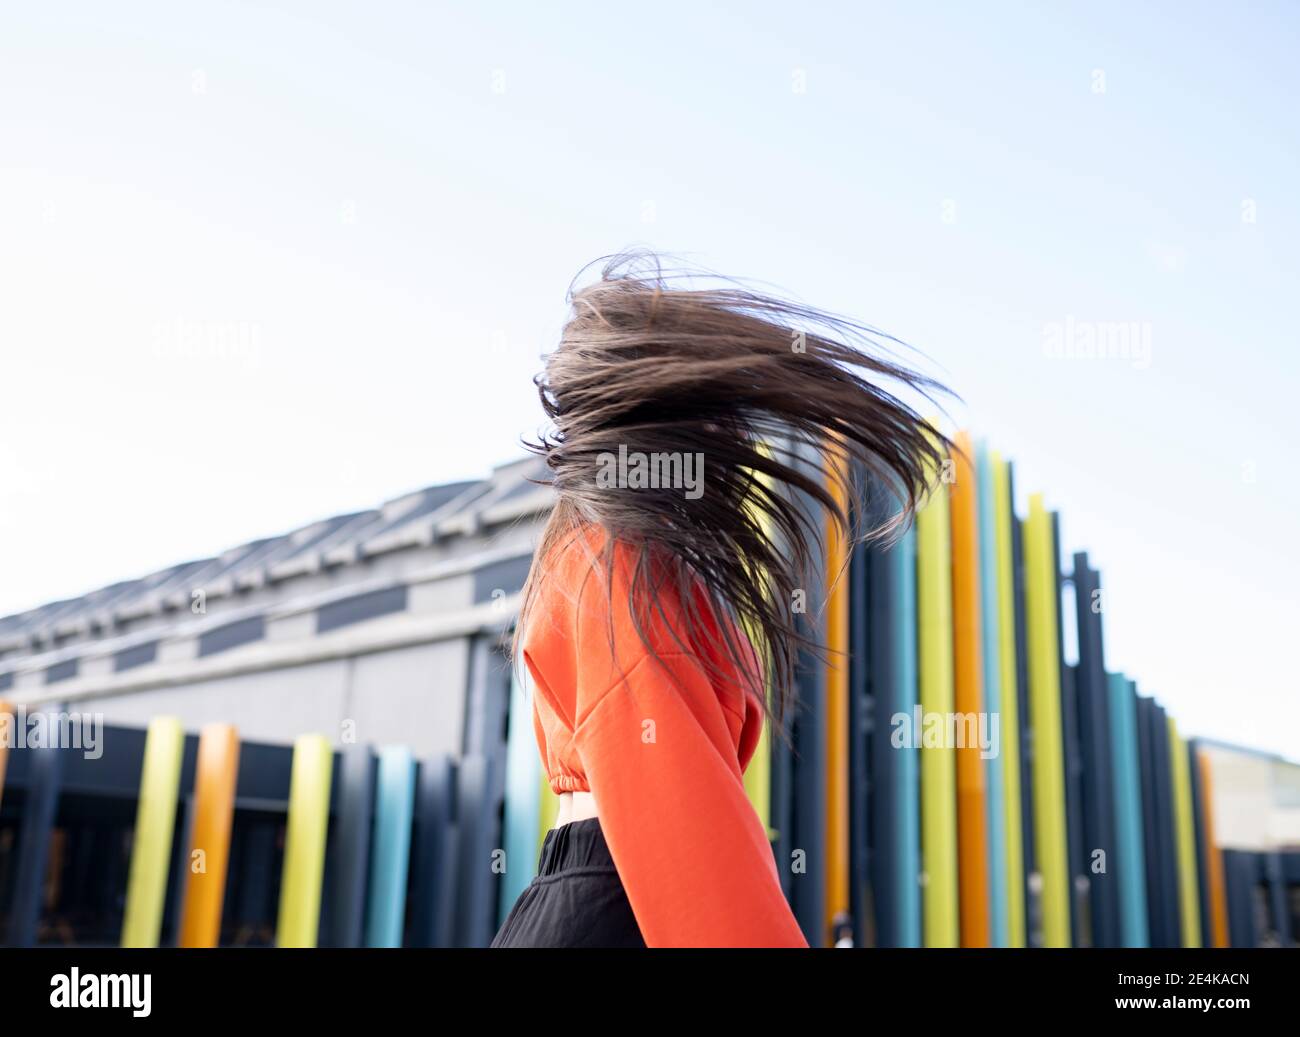 Portrait of long-haired brunette tossing hair Stock Photo